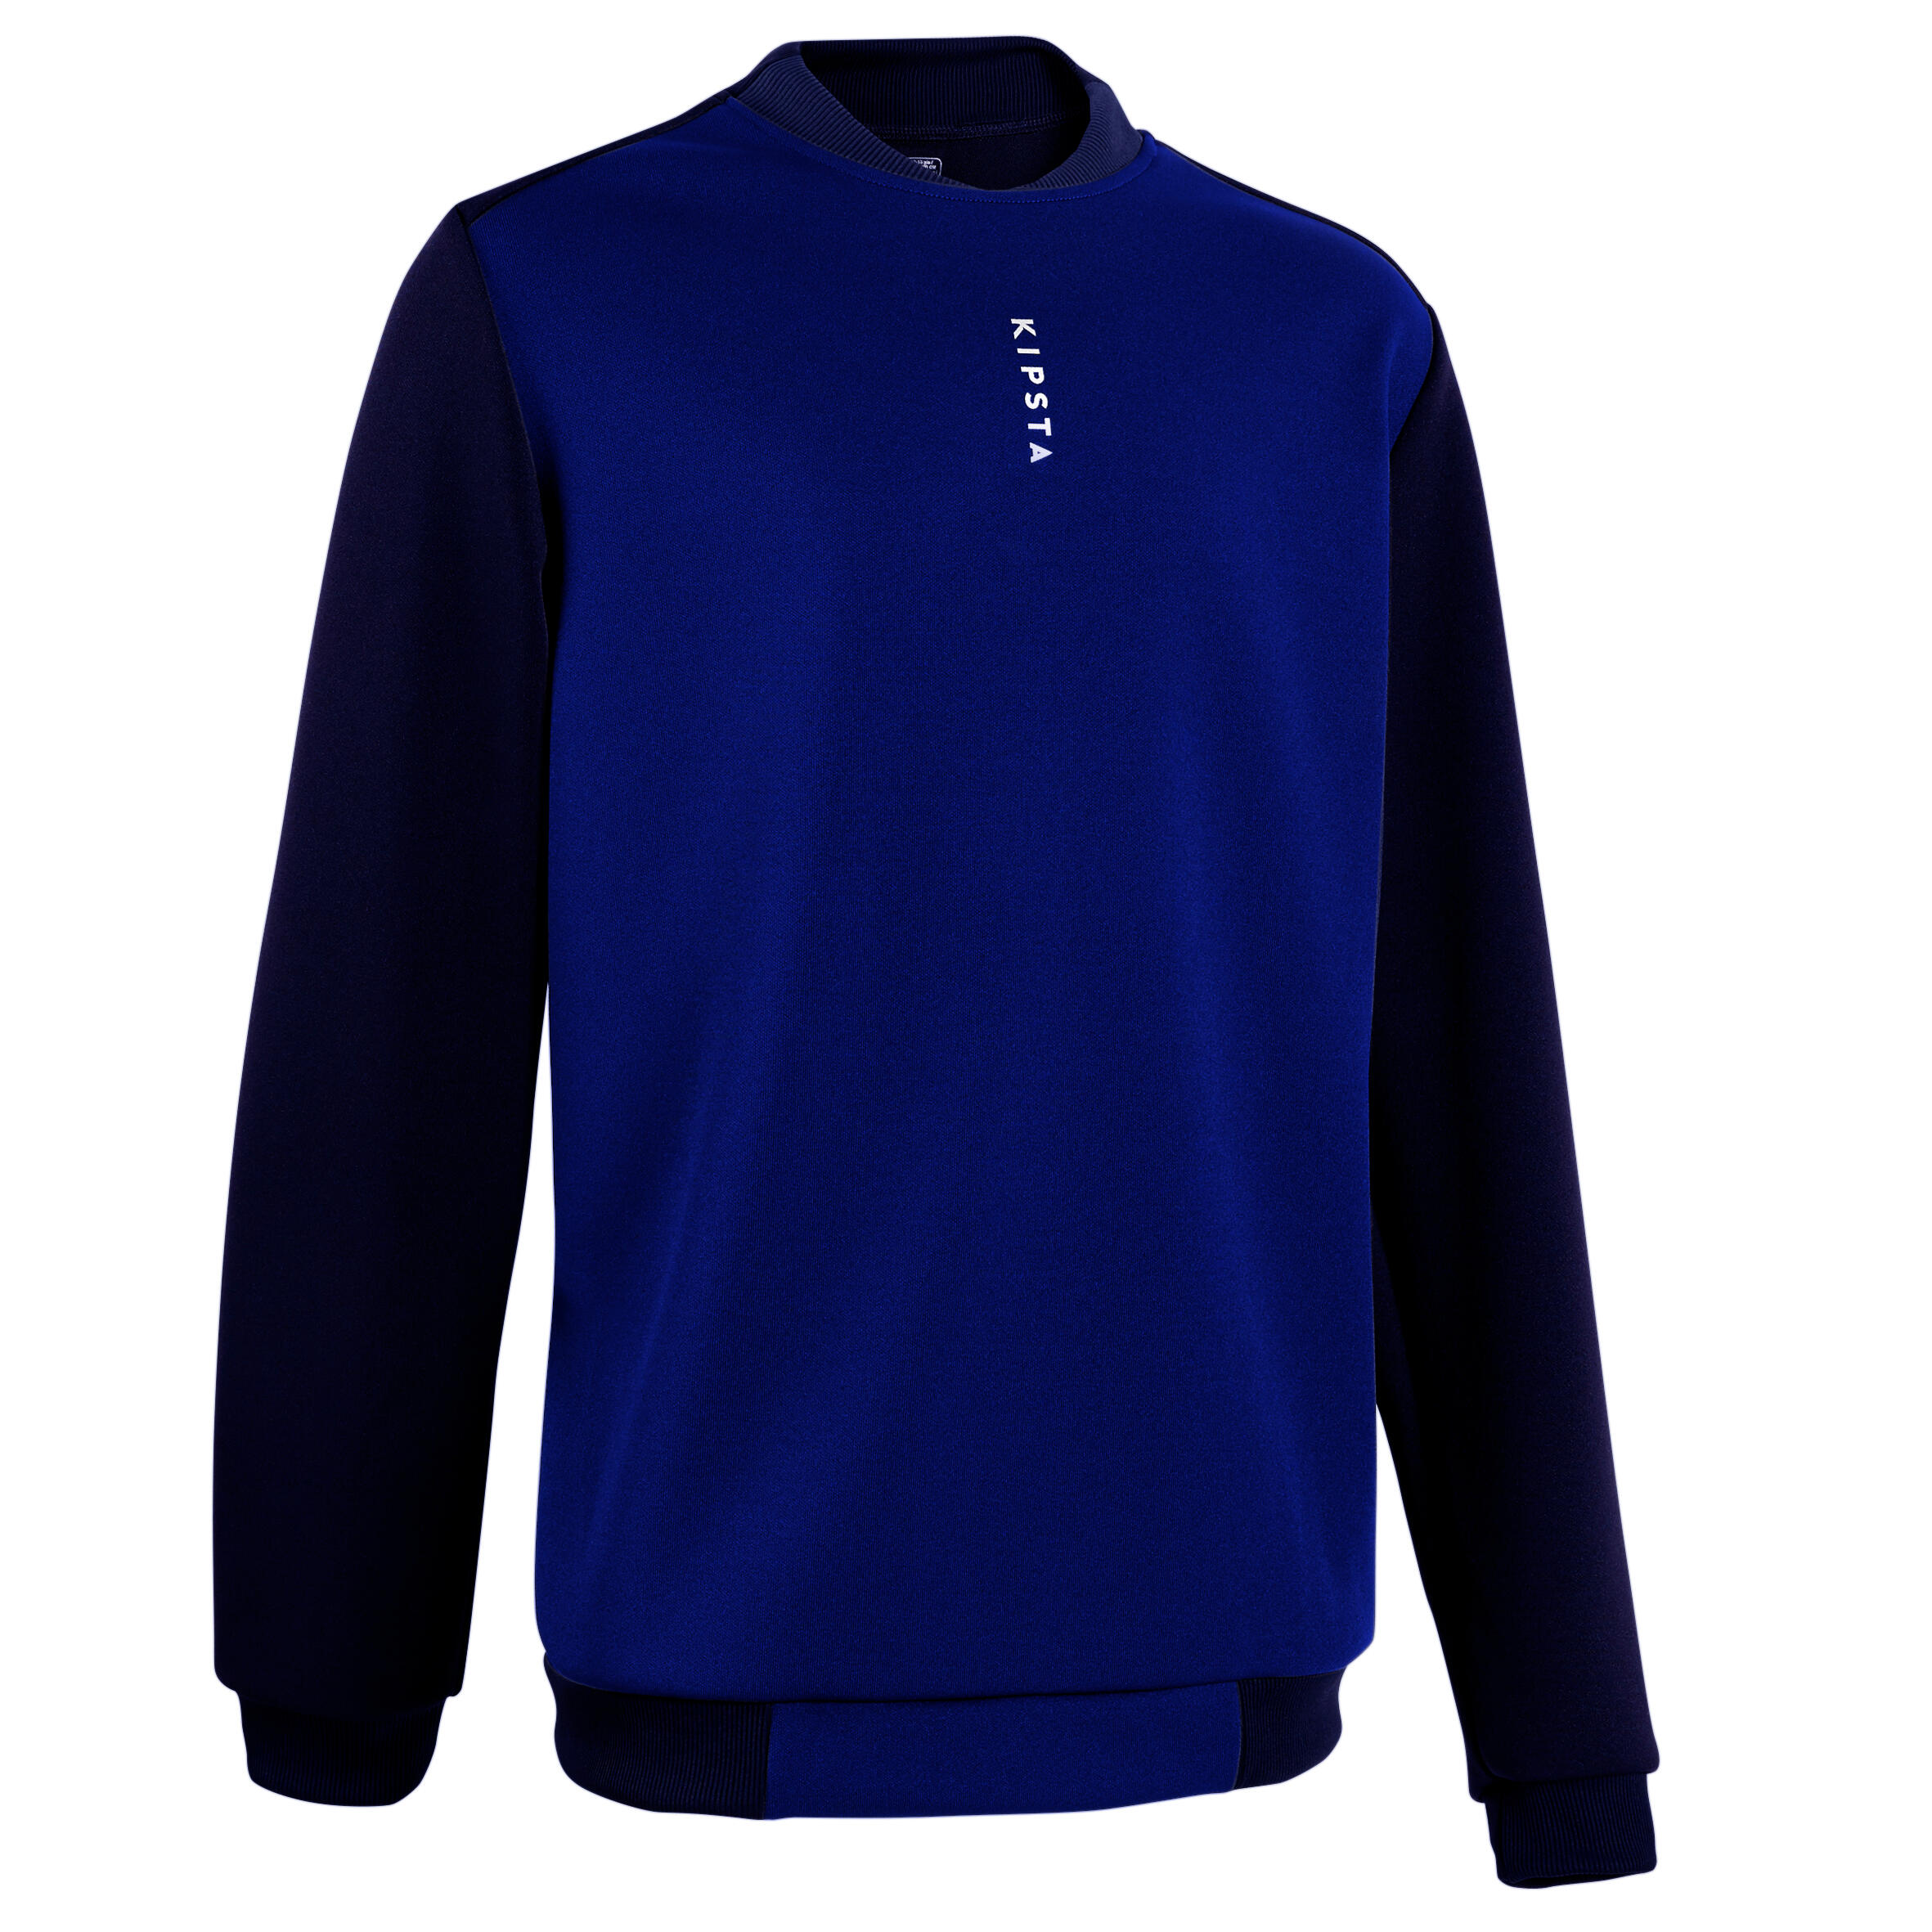 Kinder Fussball Sweatshirt - Essentiel Club blau/marineblau